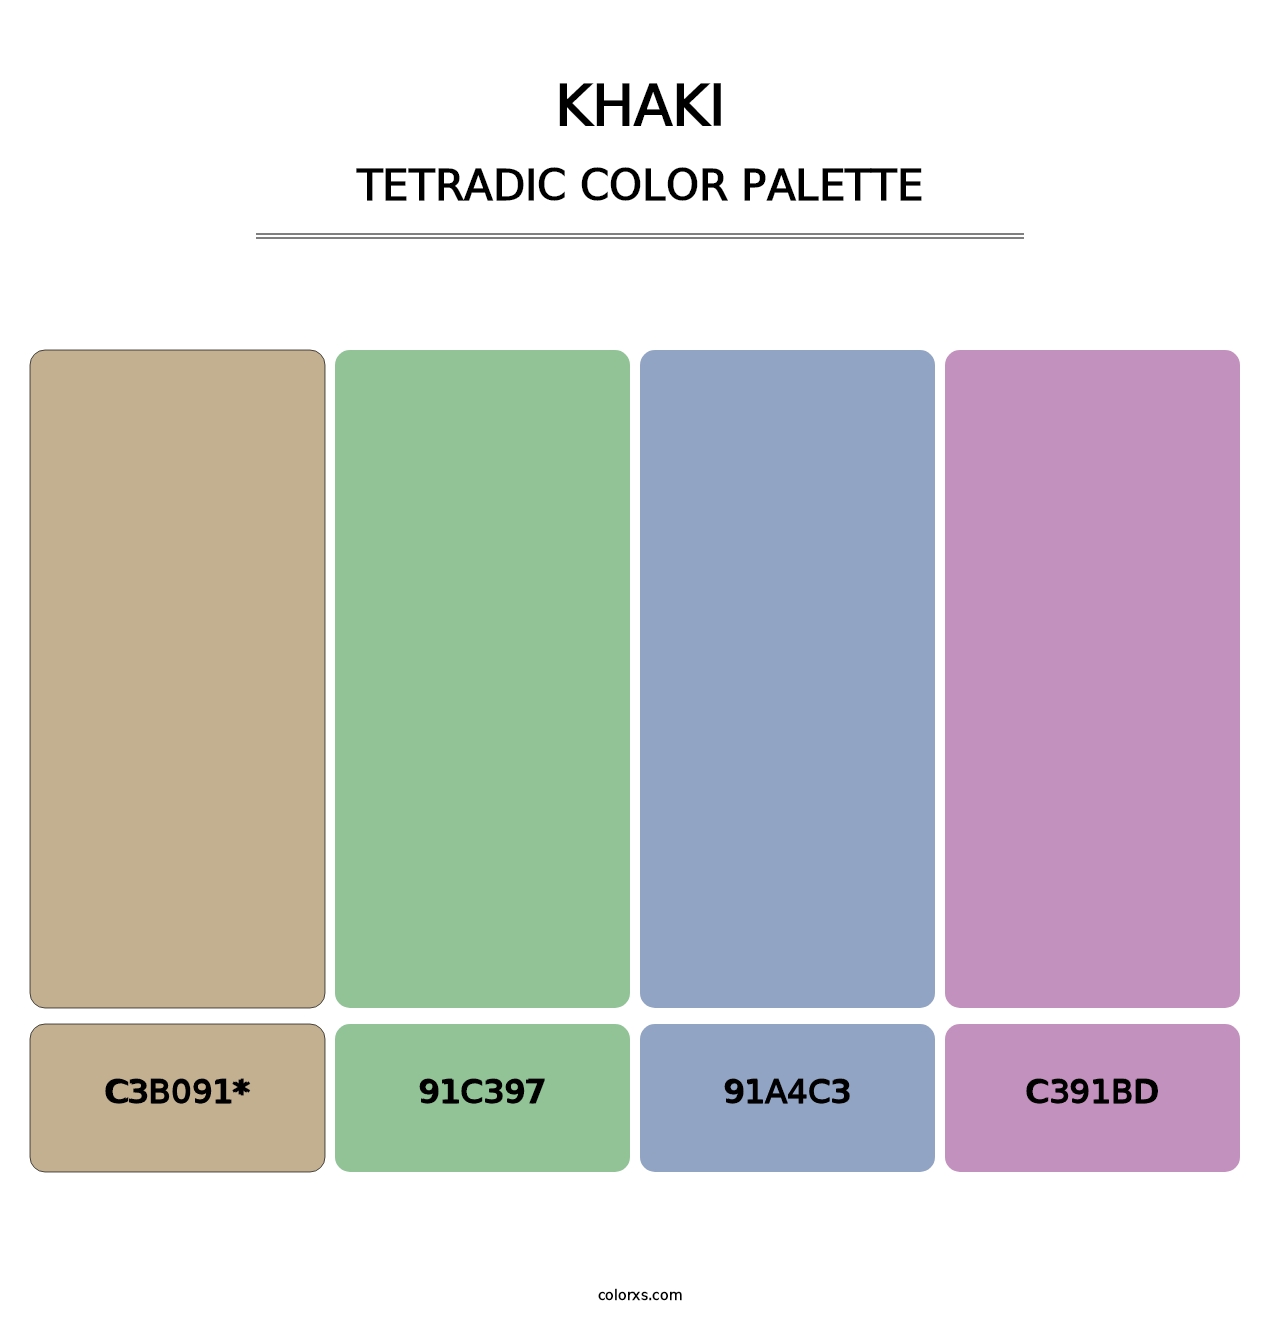 Khaki - Tetradic Color Palette